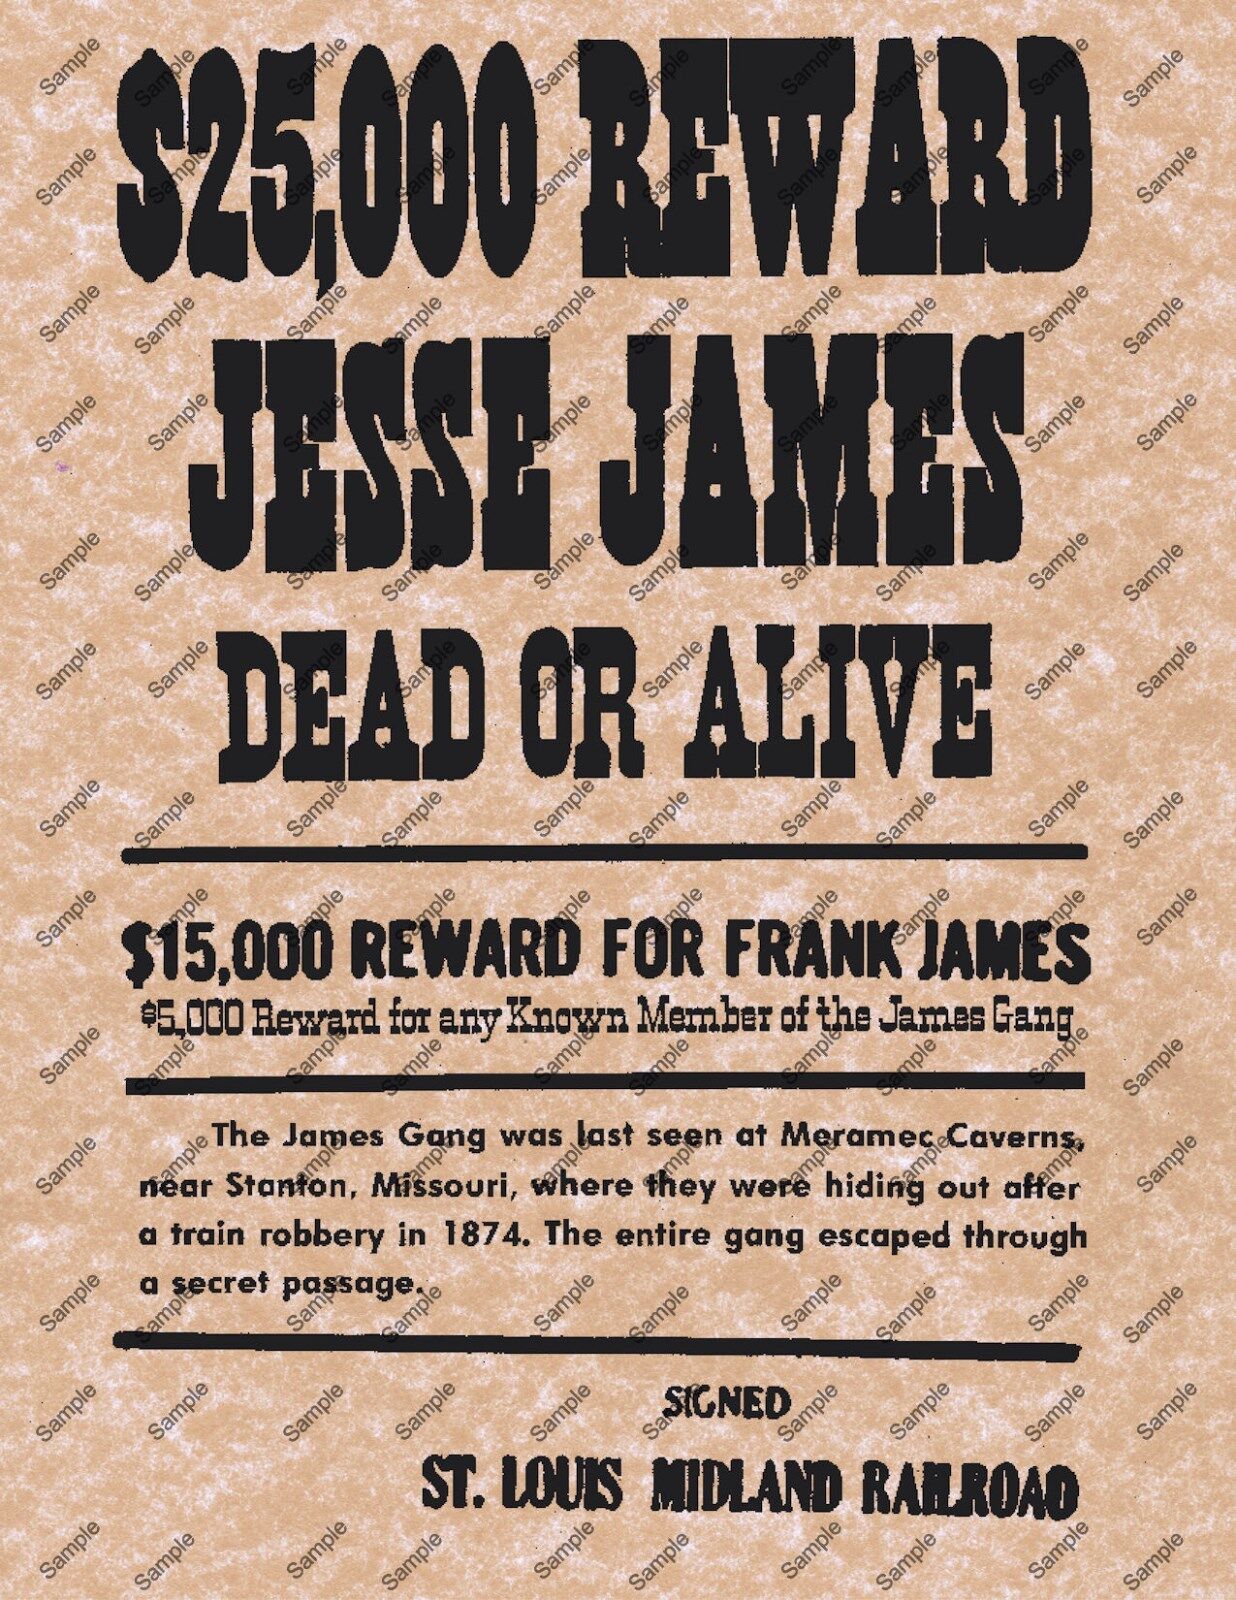 JESSE JAMES $25000 WANTED DEAD OR ALIVE REWARD POSTER Wild West Western 013